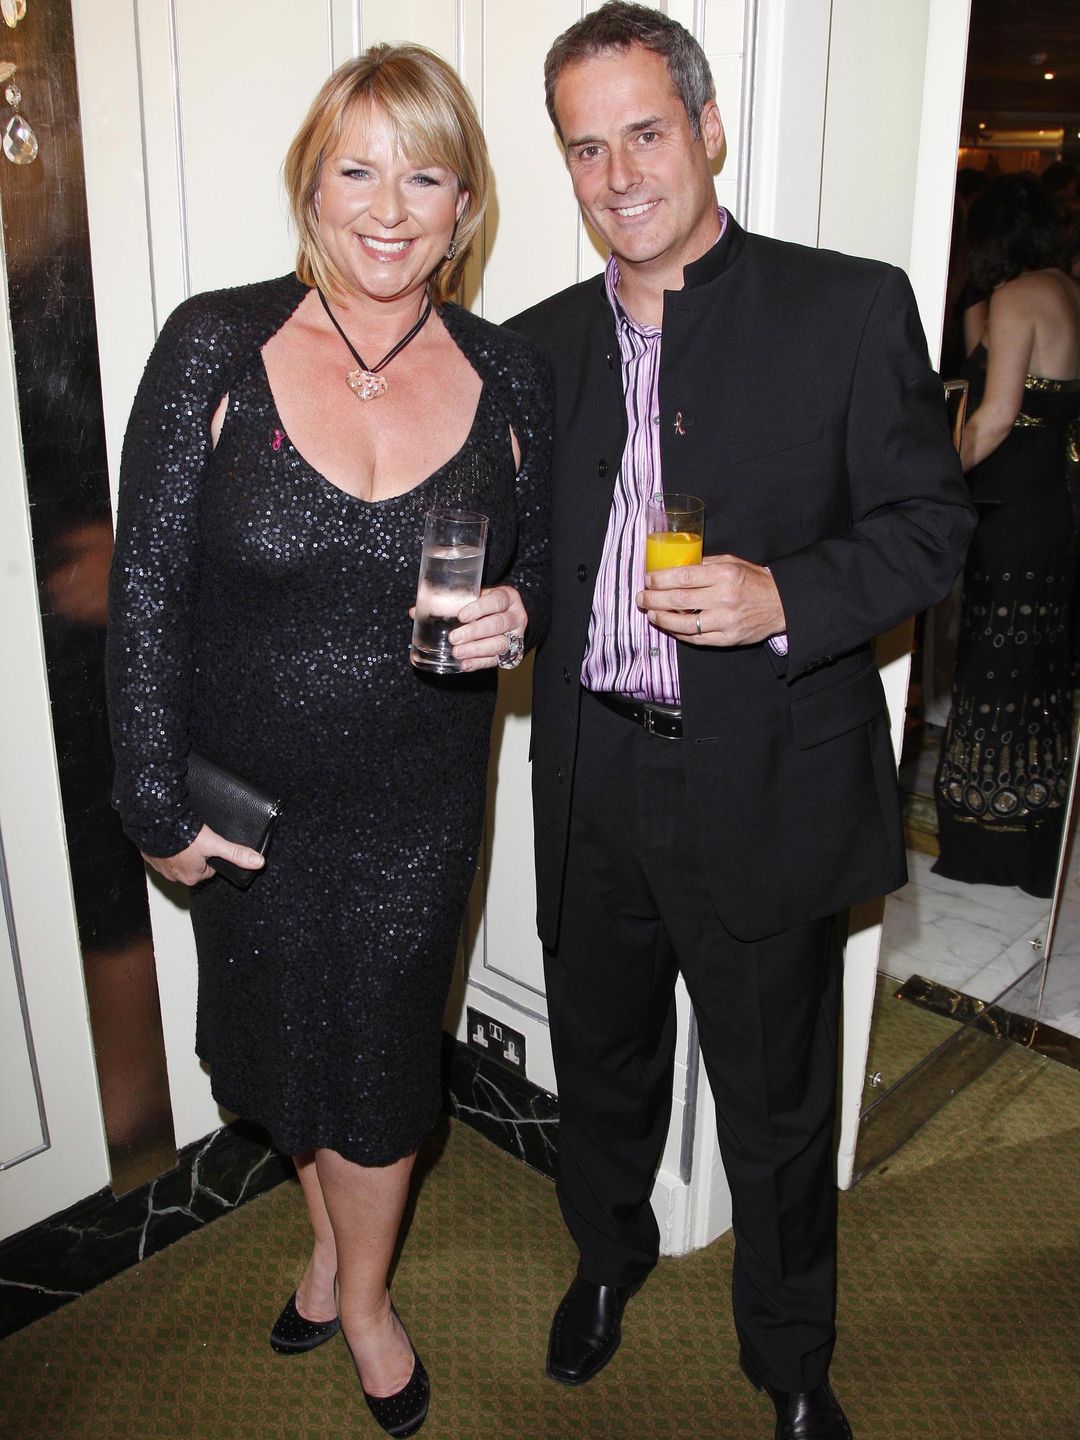 Fern Britton in a black dress alongside ex husband Phil Vickery in a suit